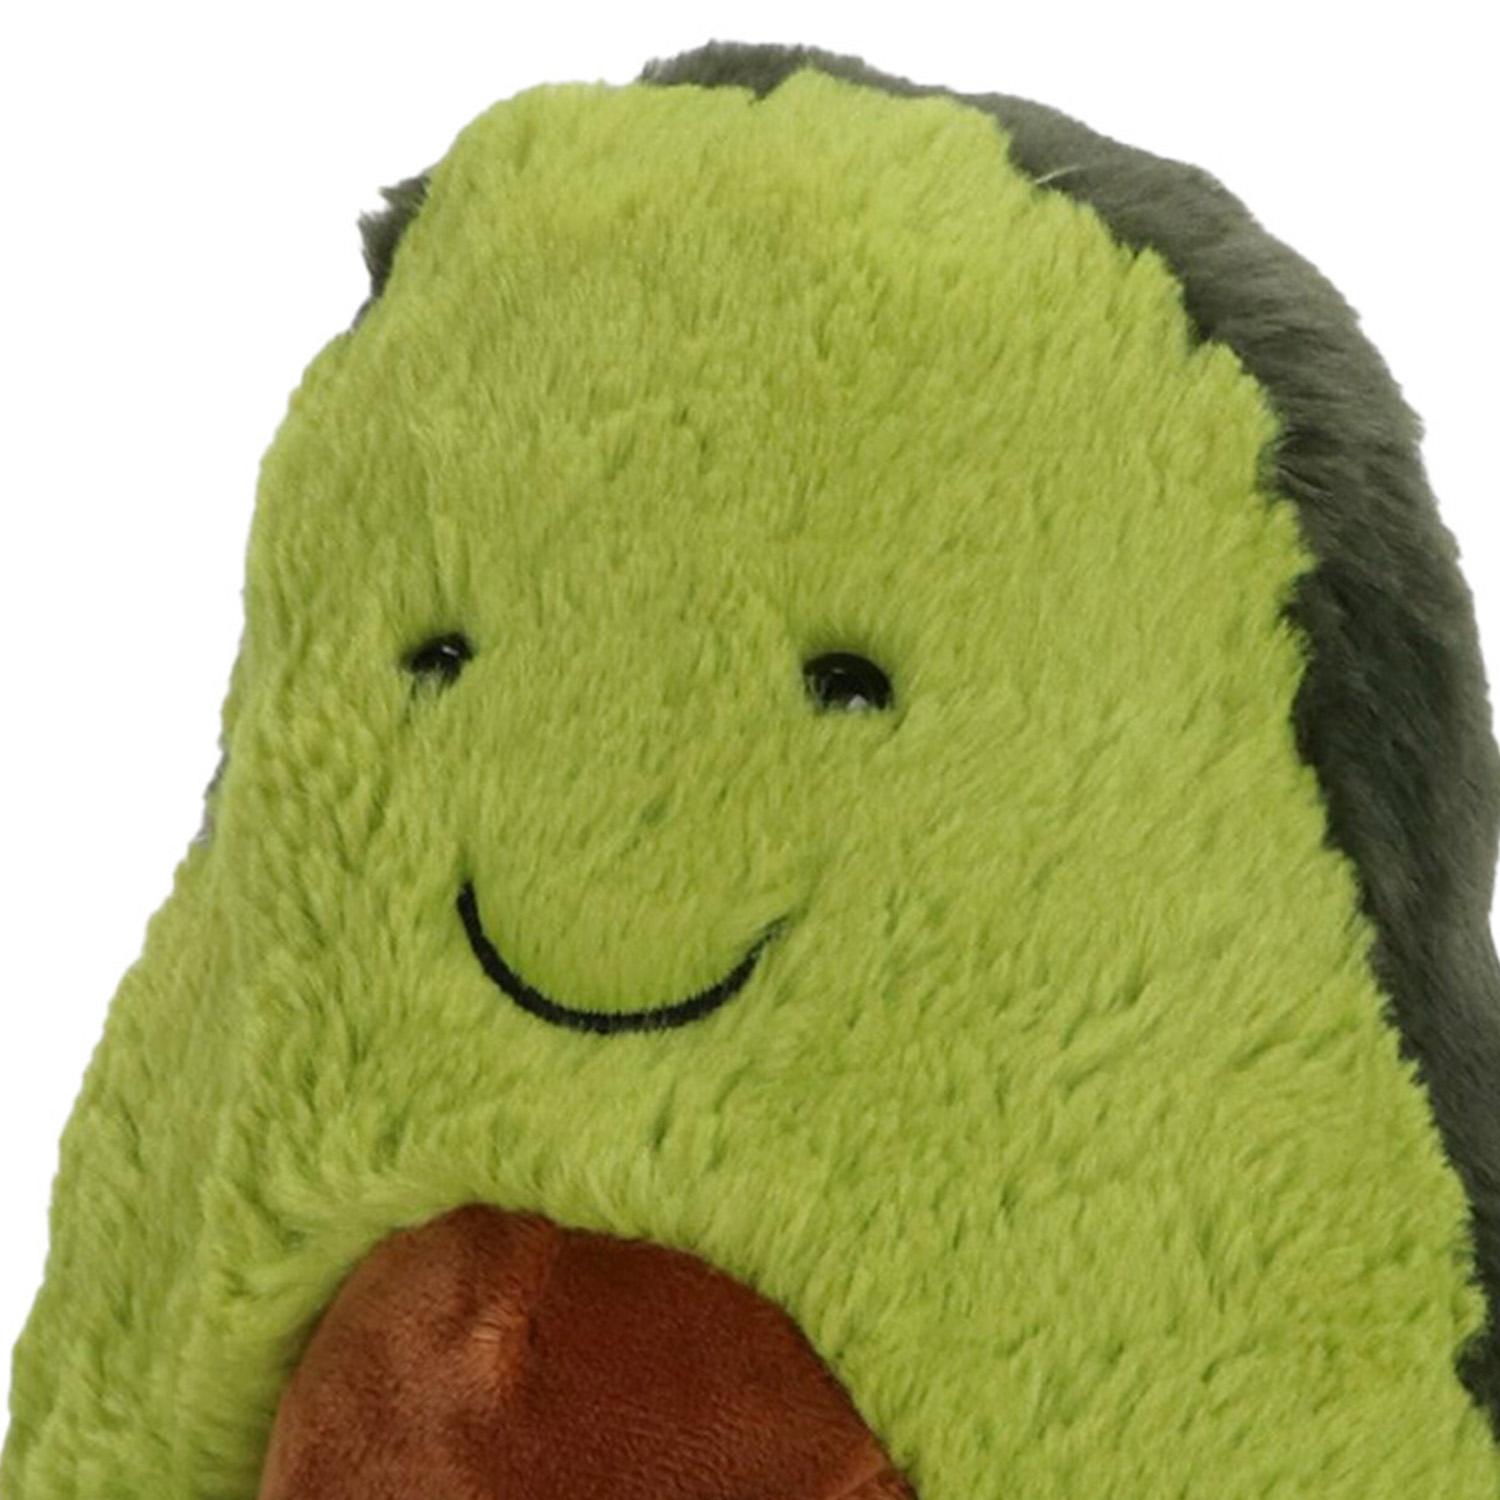 Avocado Plush Toy - Green Image 2